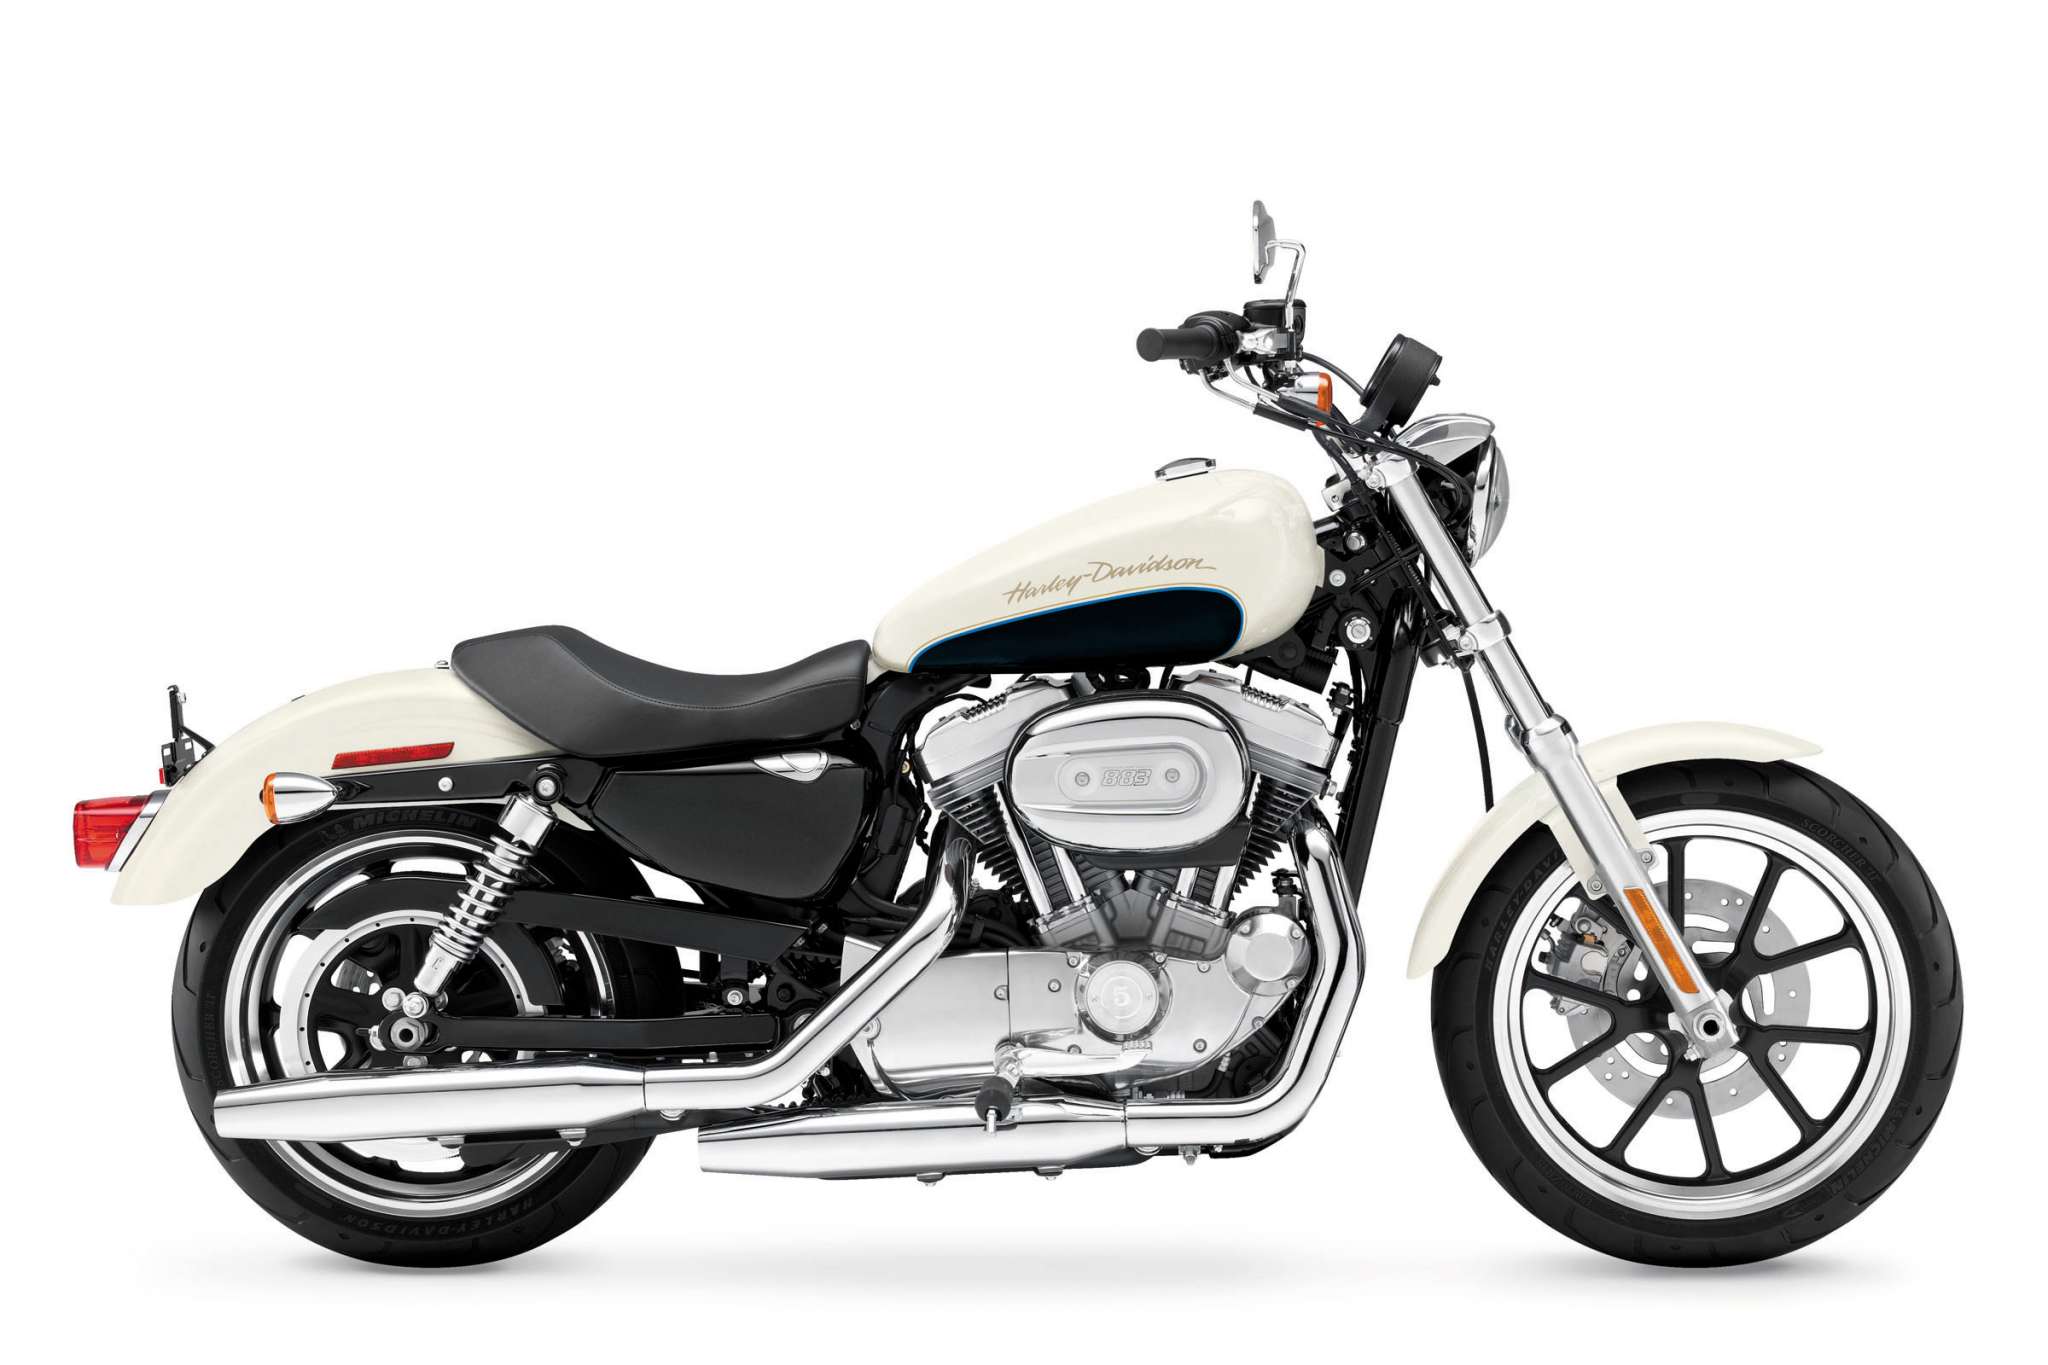 2013 Harley Davidson Xl883l Sportster 883 Superlow Review